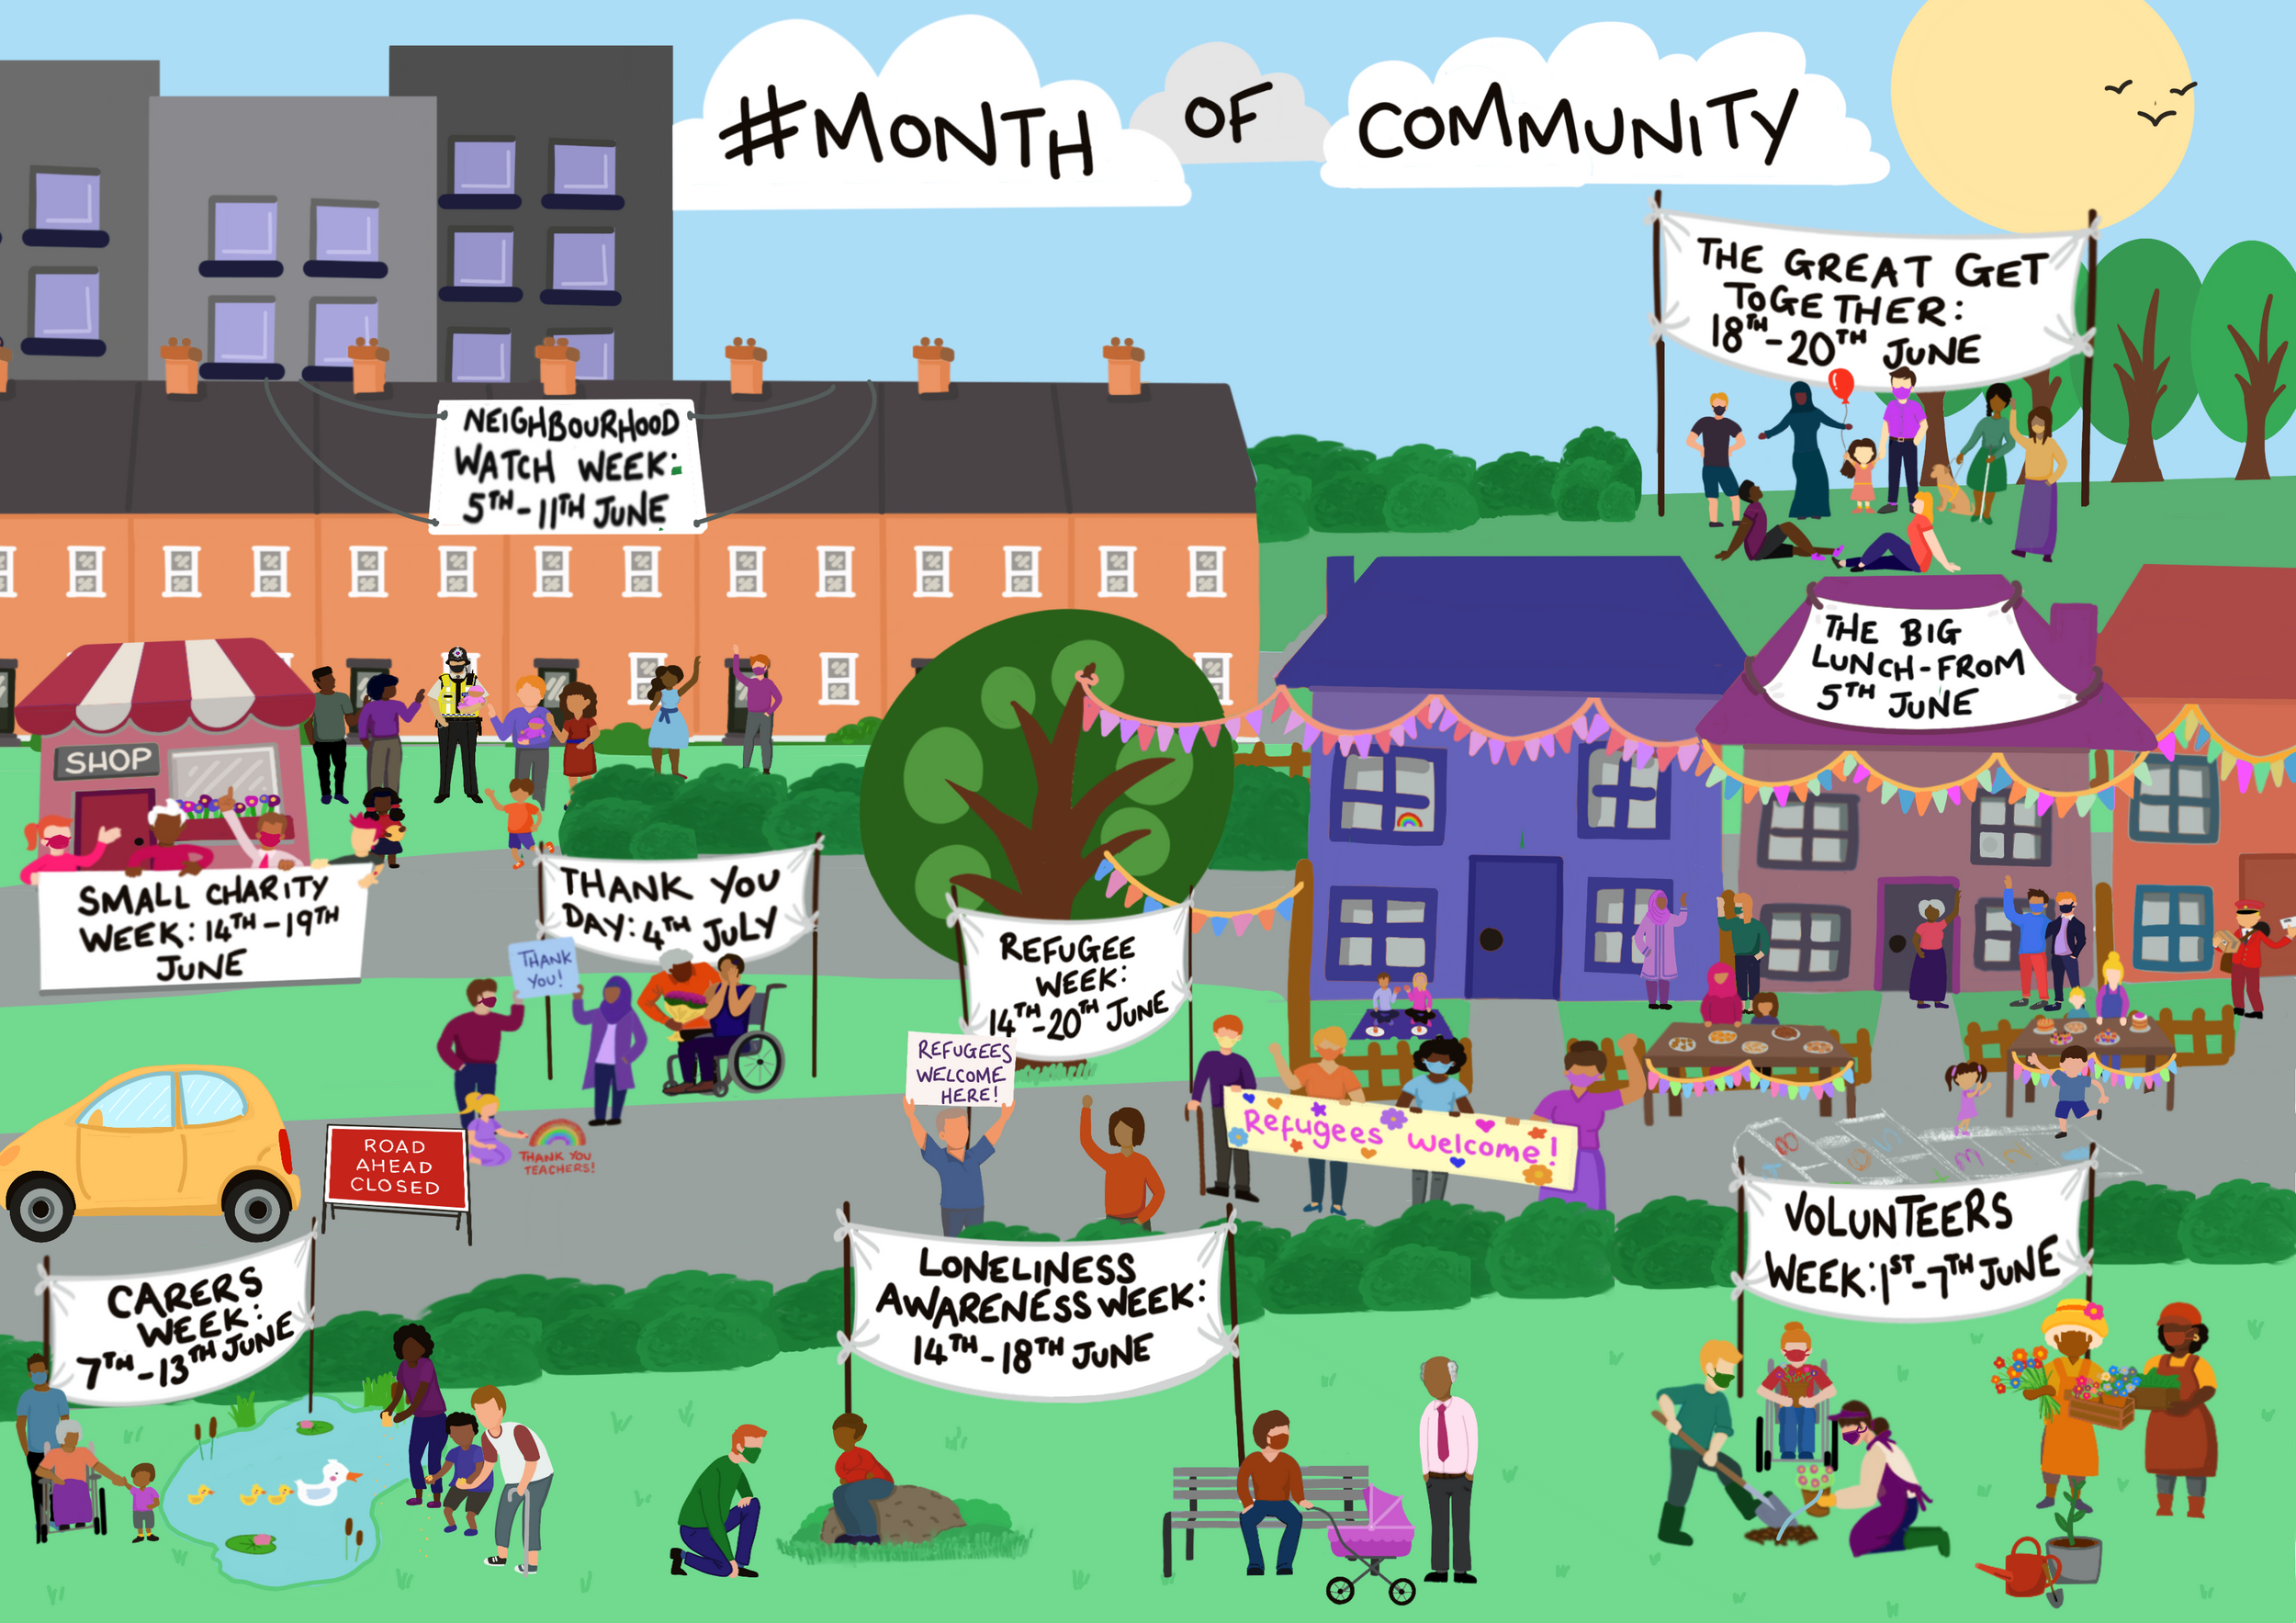 Month of community image